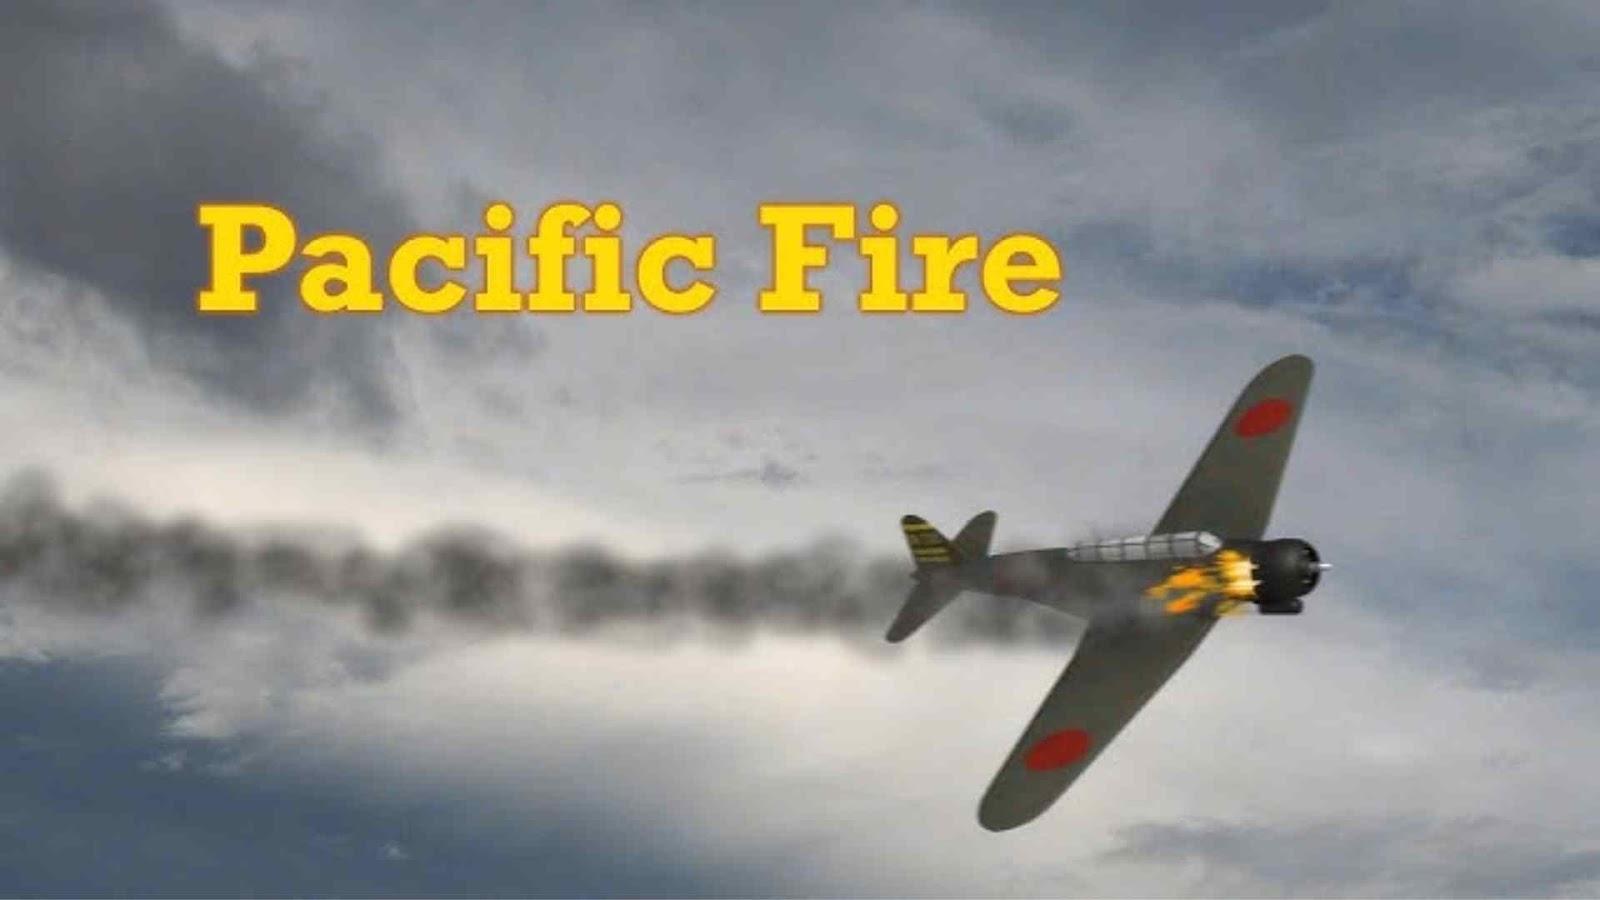  Pacific Fire